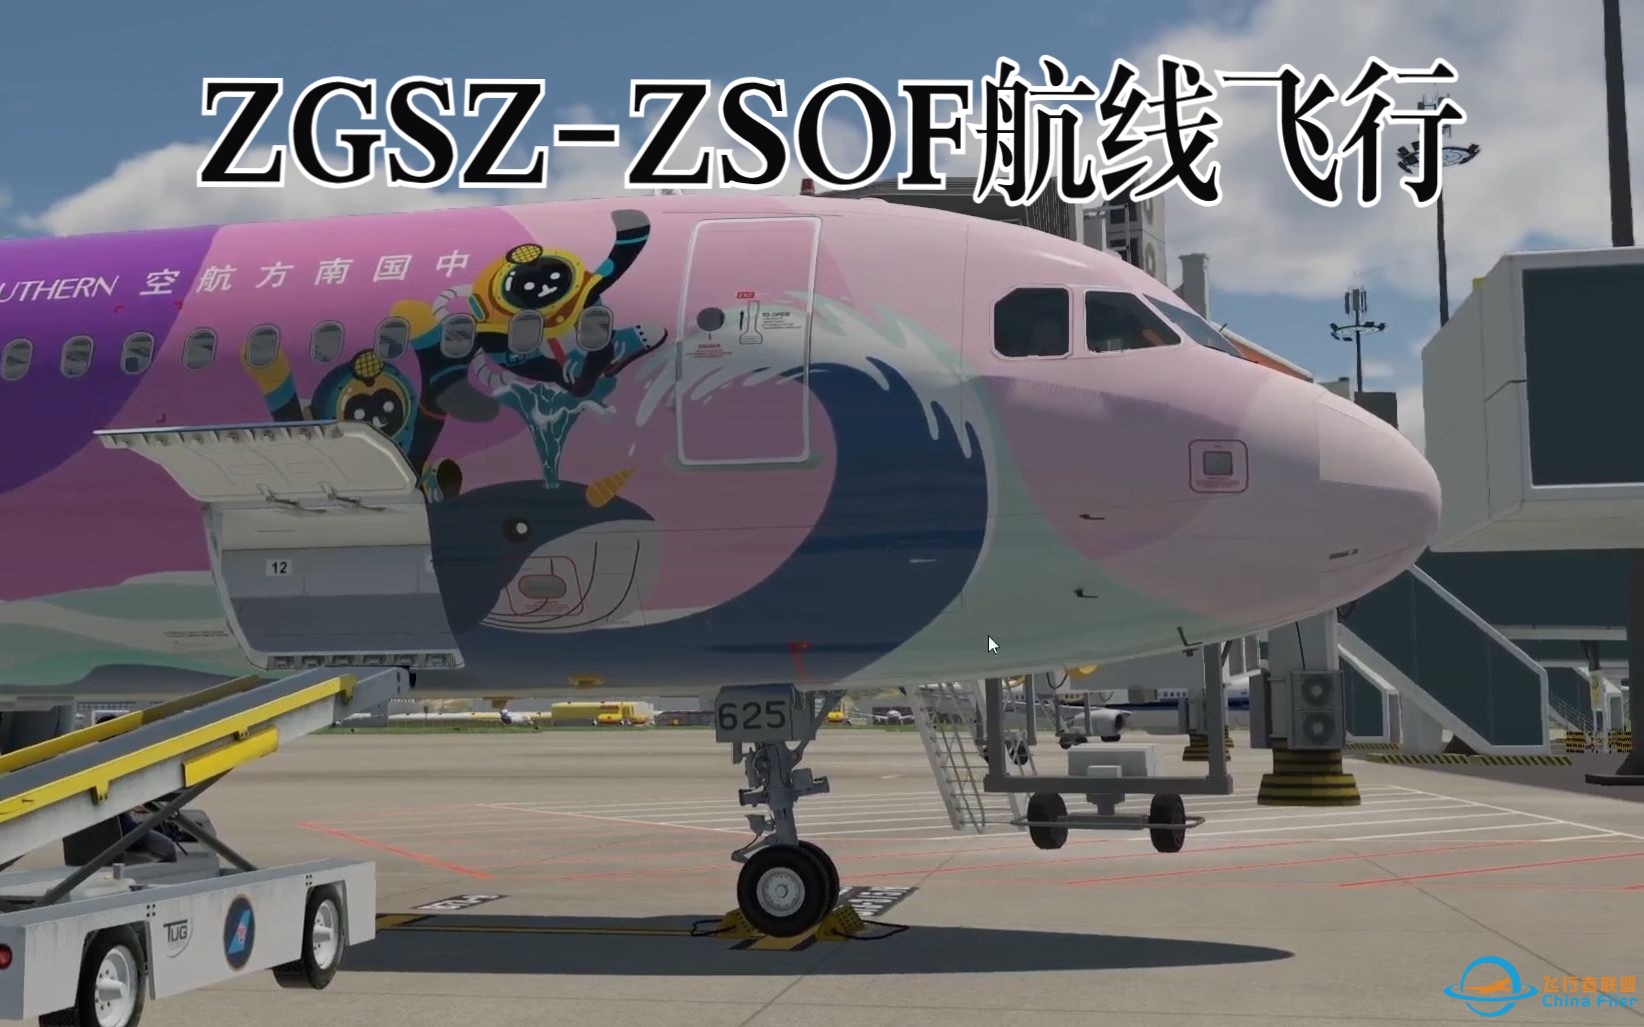 [X-Plane11]ZGSZ-ZSOF航线视频-2155 